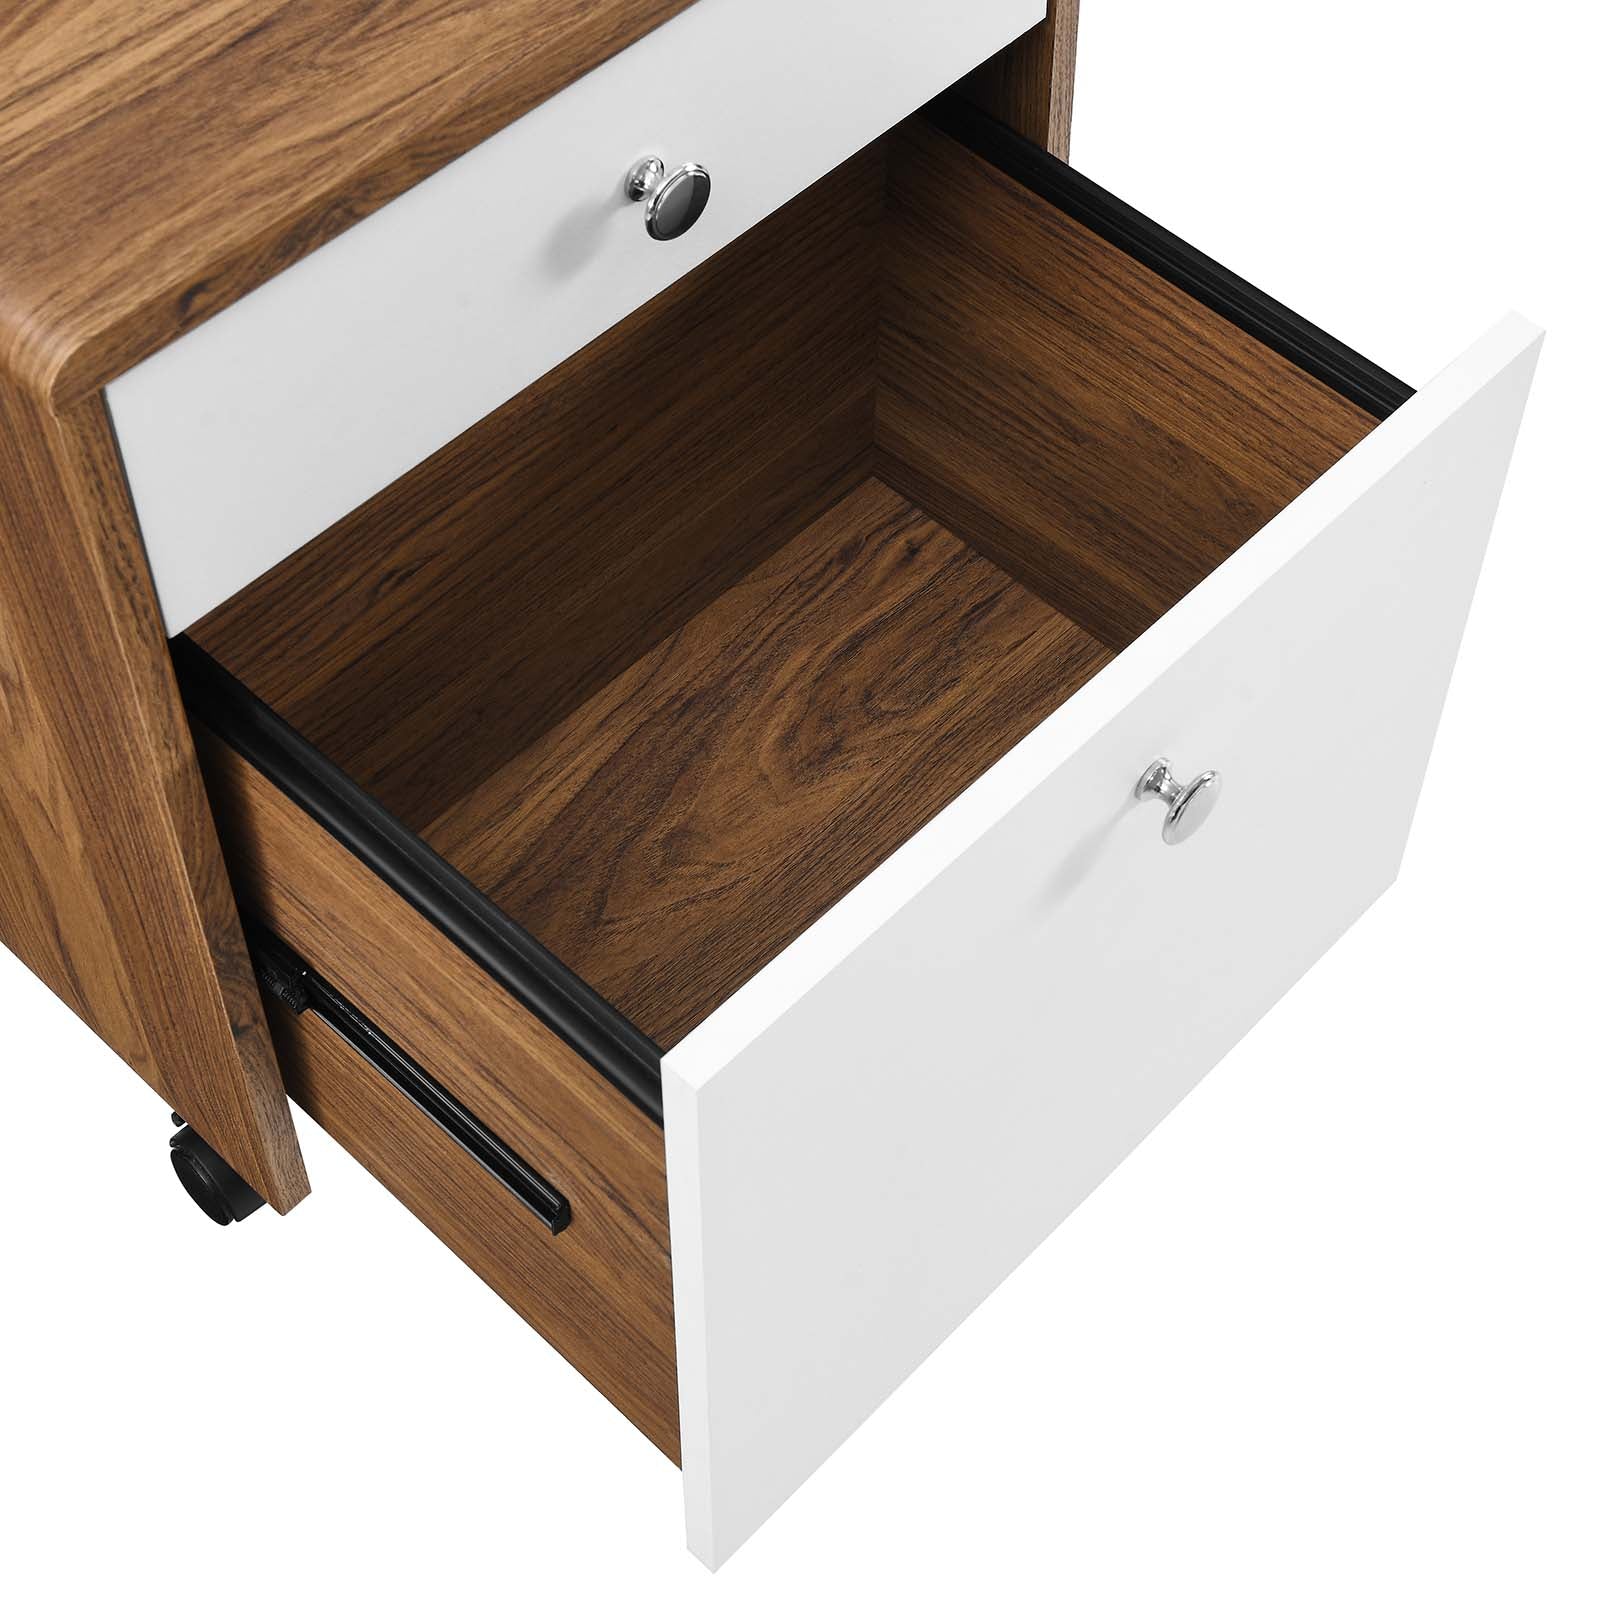 Transmit Wood File Cabinet-Desk-Modway-Wall2Wall Furnishings